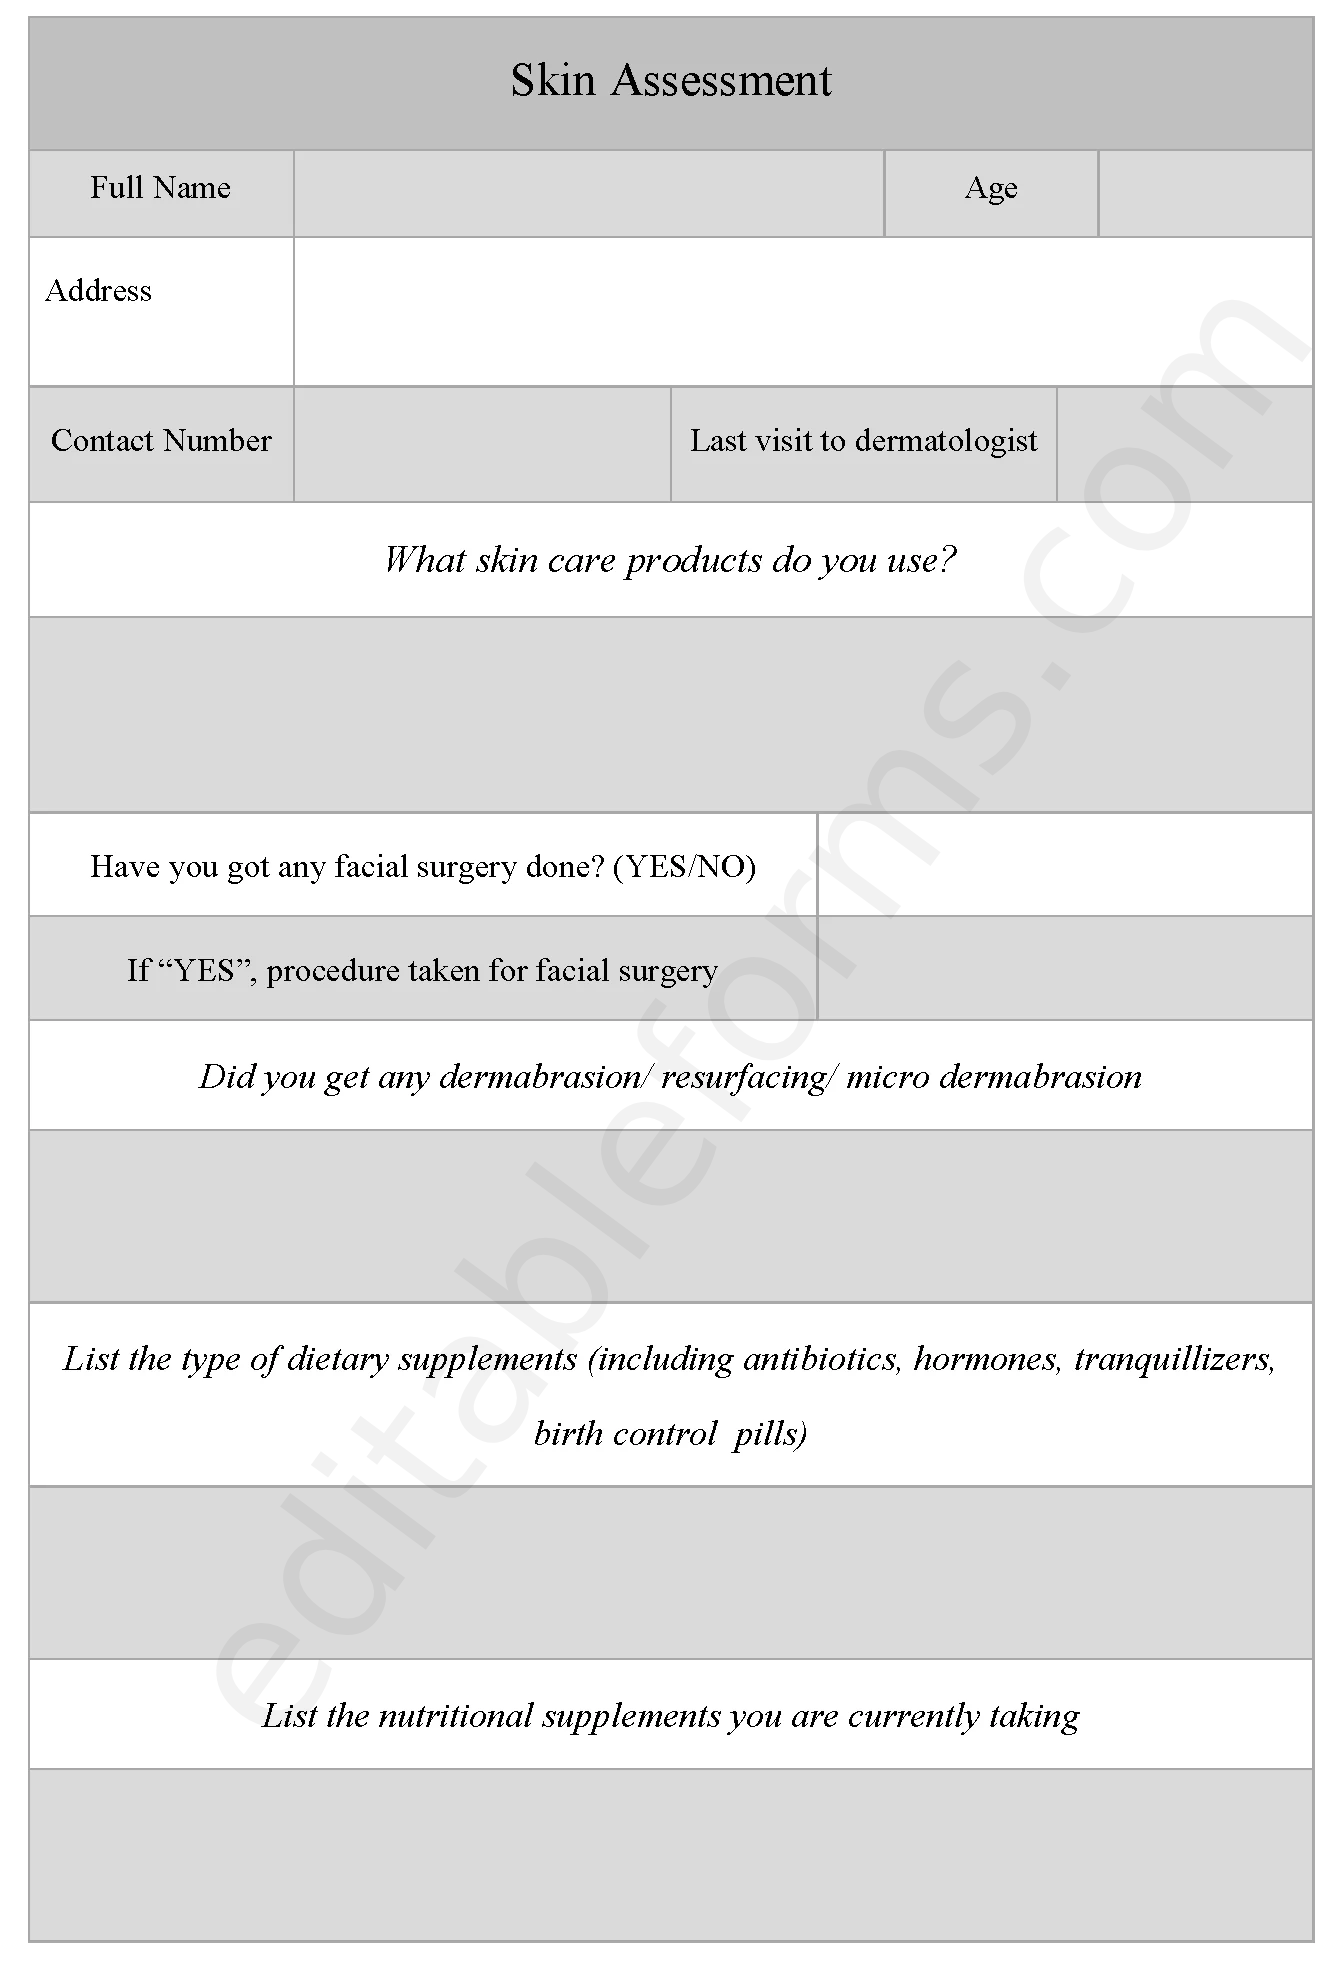 Skin Assessment Fillable PDF Template